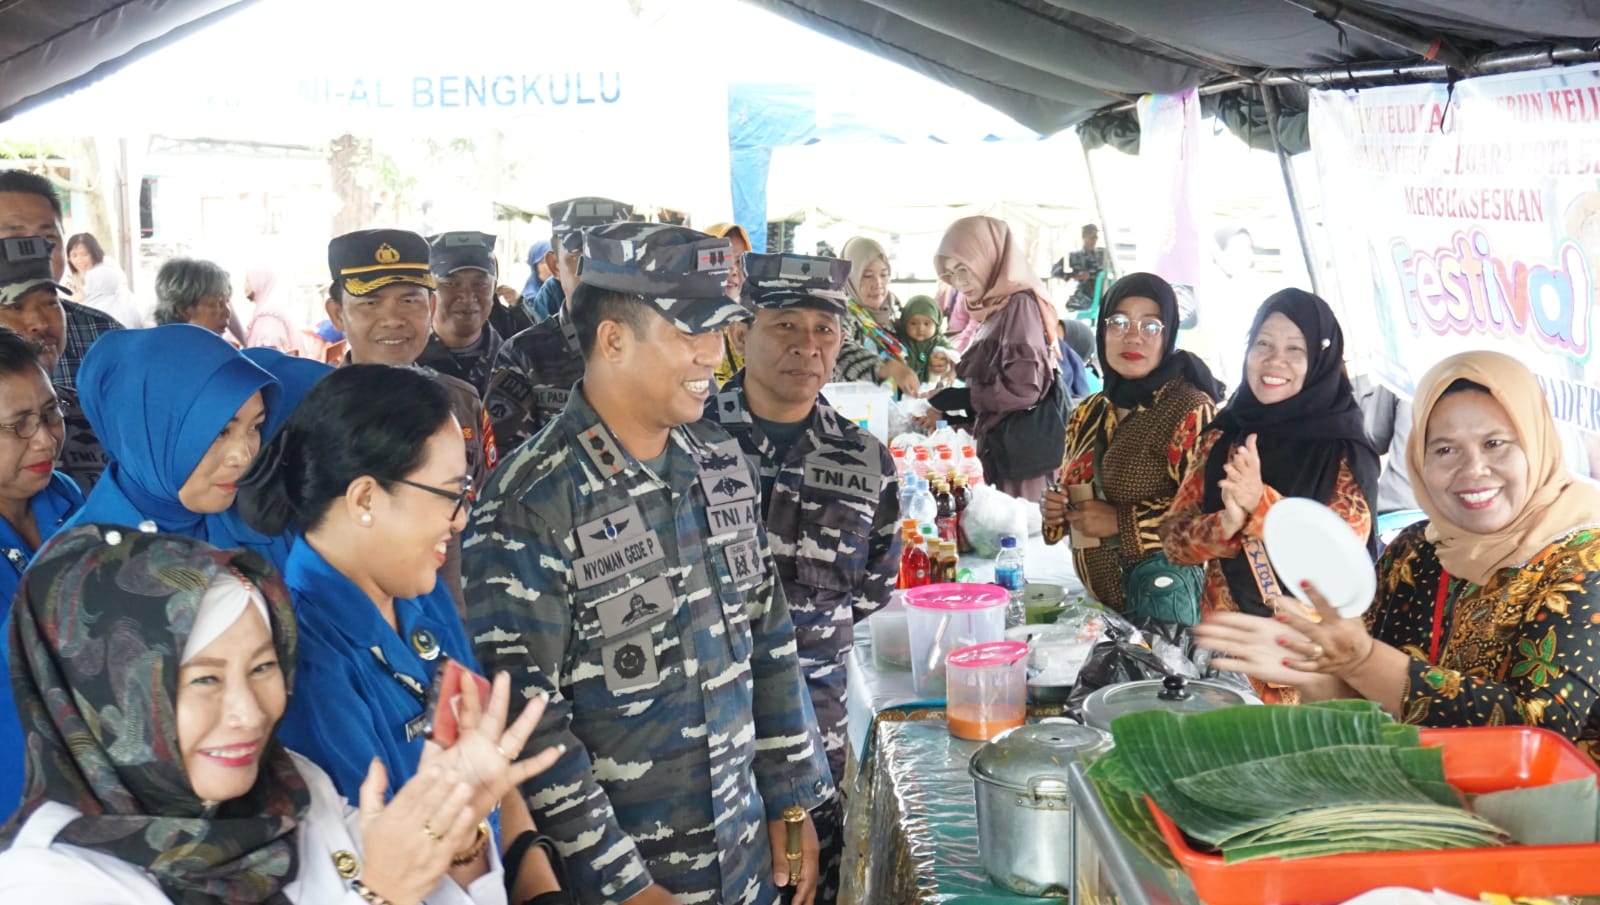 TNI AL Lanal Bengkulu Tinjau Kampung Bahari Nusantara di Tapak Paderi Kota Bengkulu